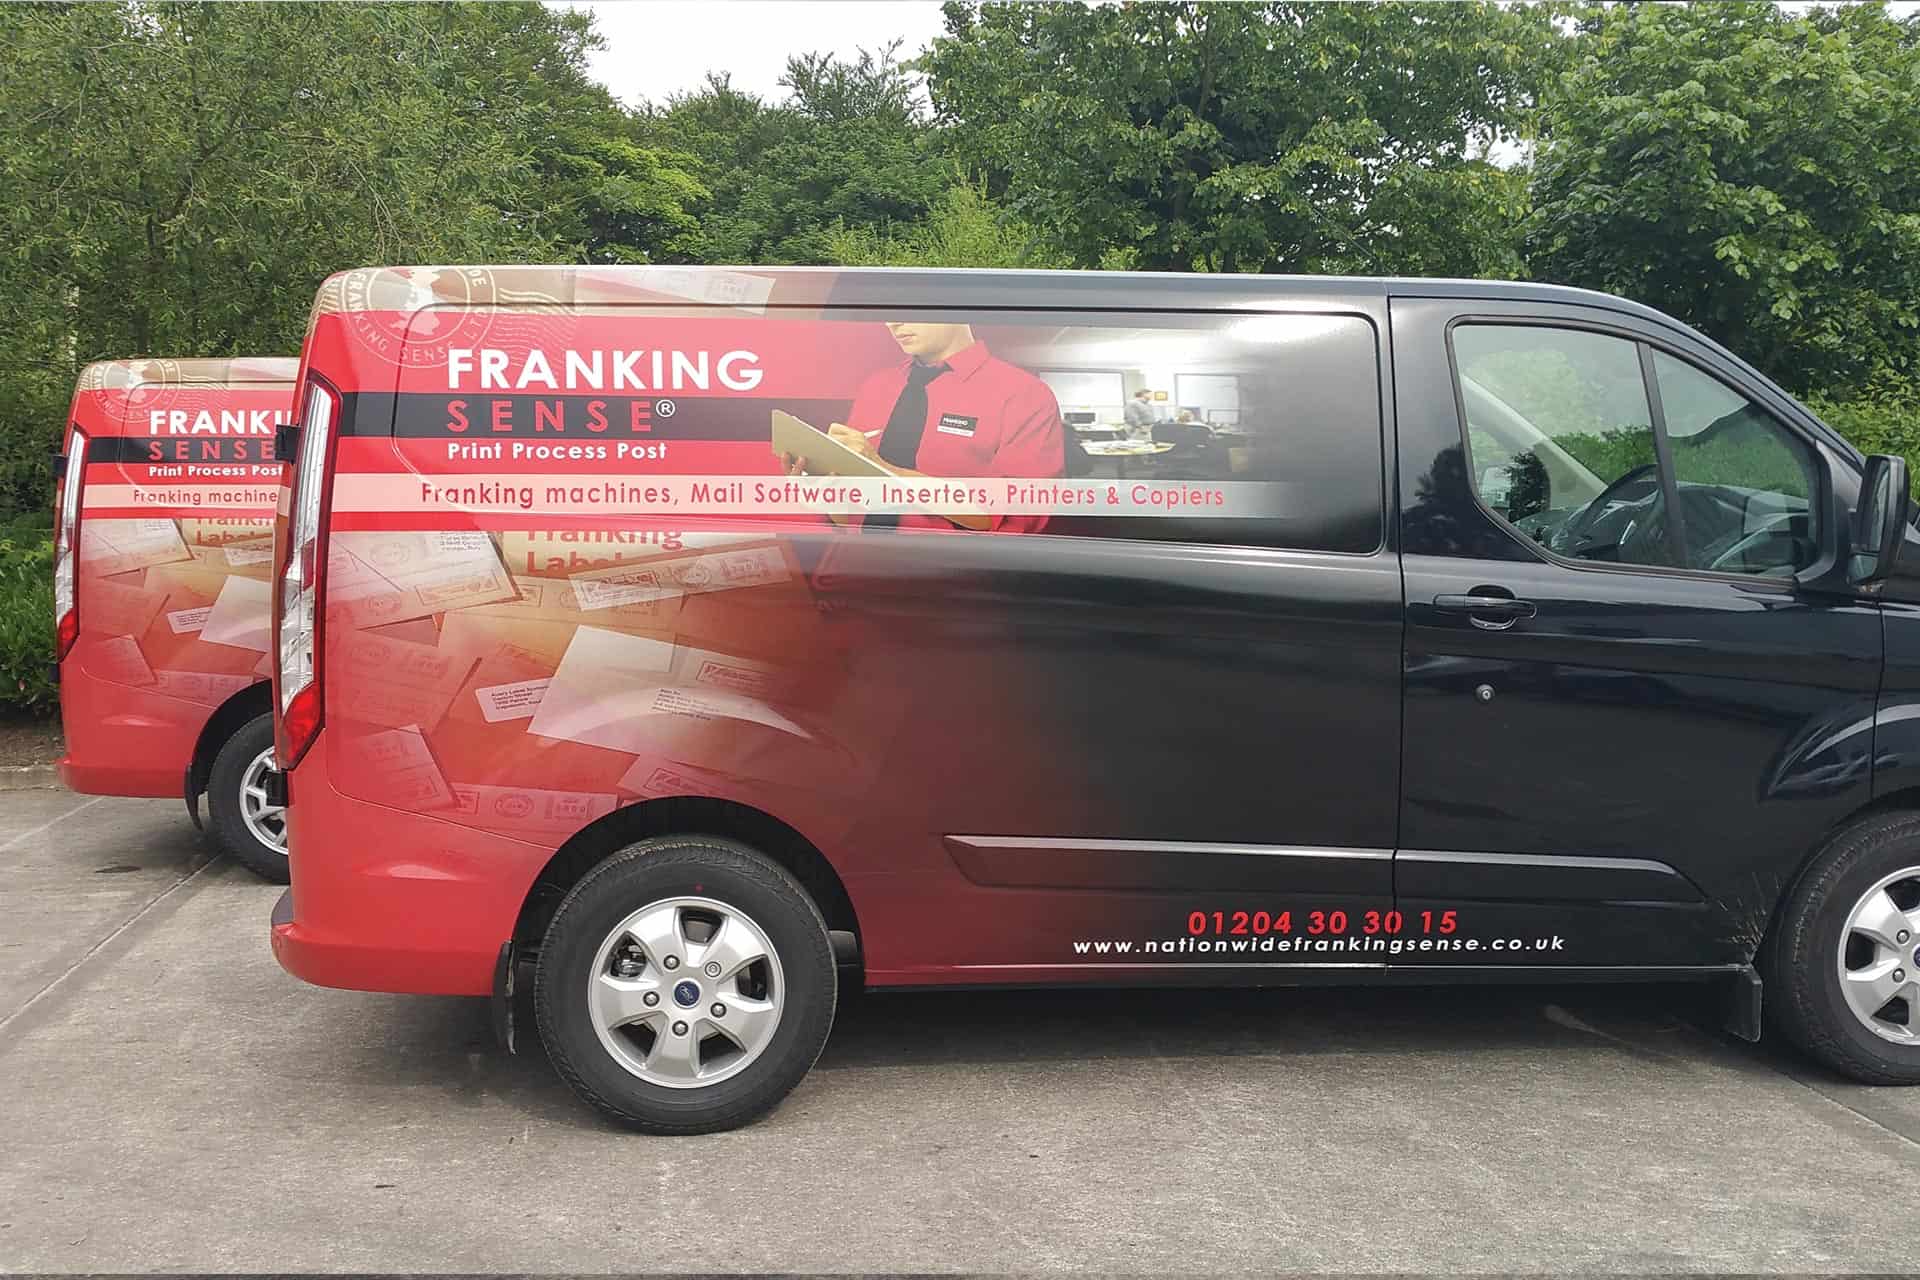 Franking Sense fleet - full vehicle wrap digitally printed graphics